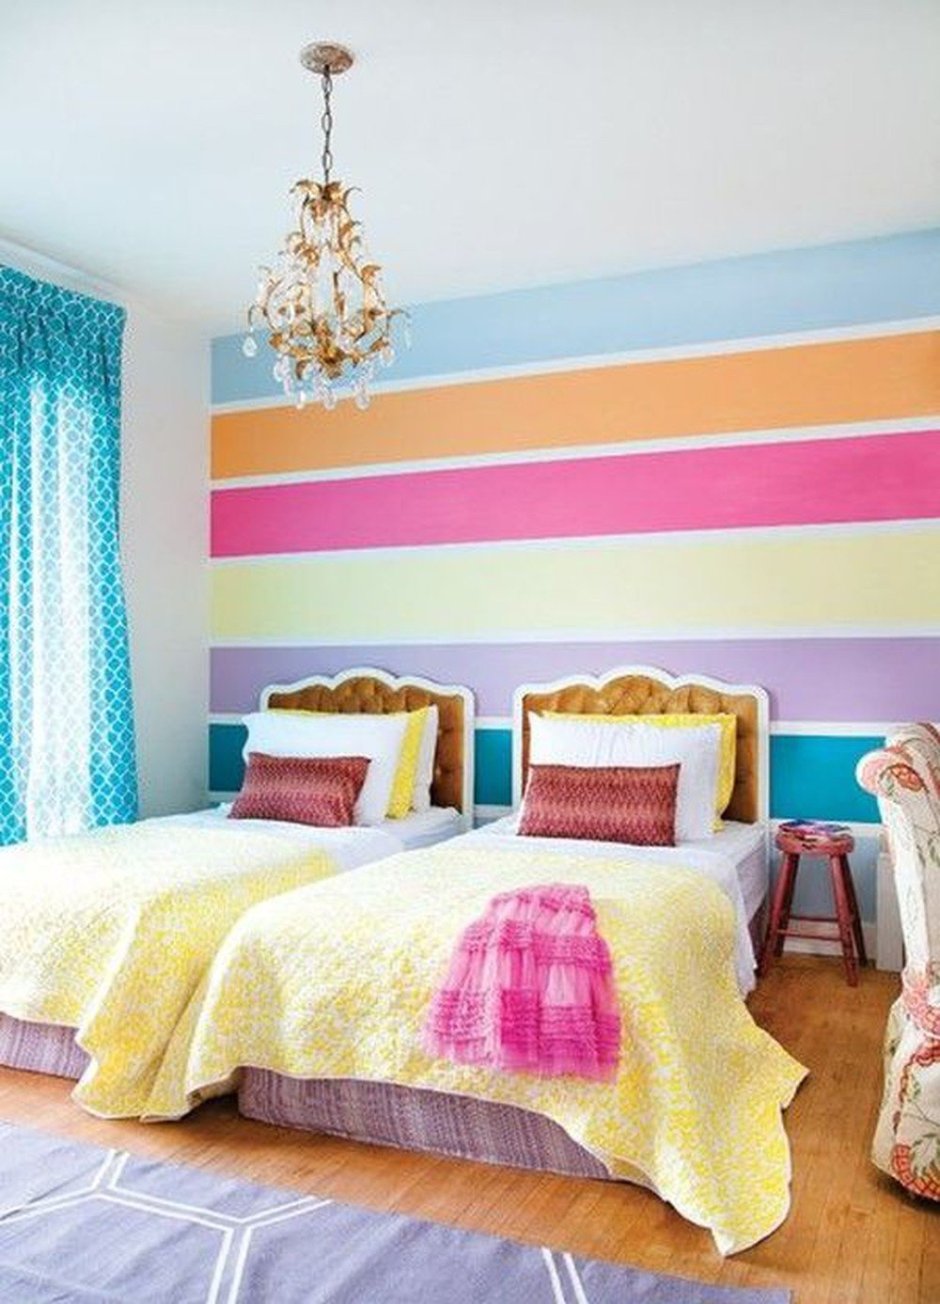 Покраска стен в разные цвета